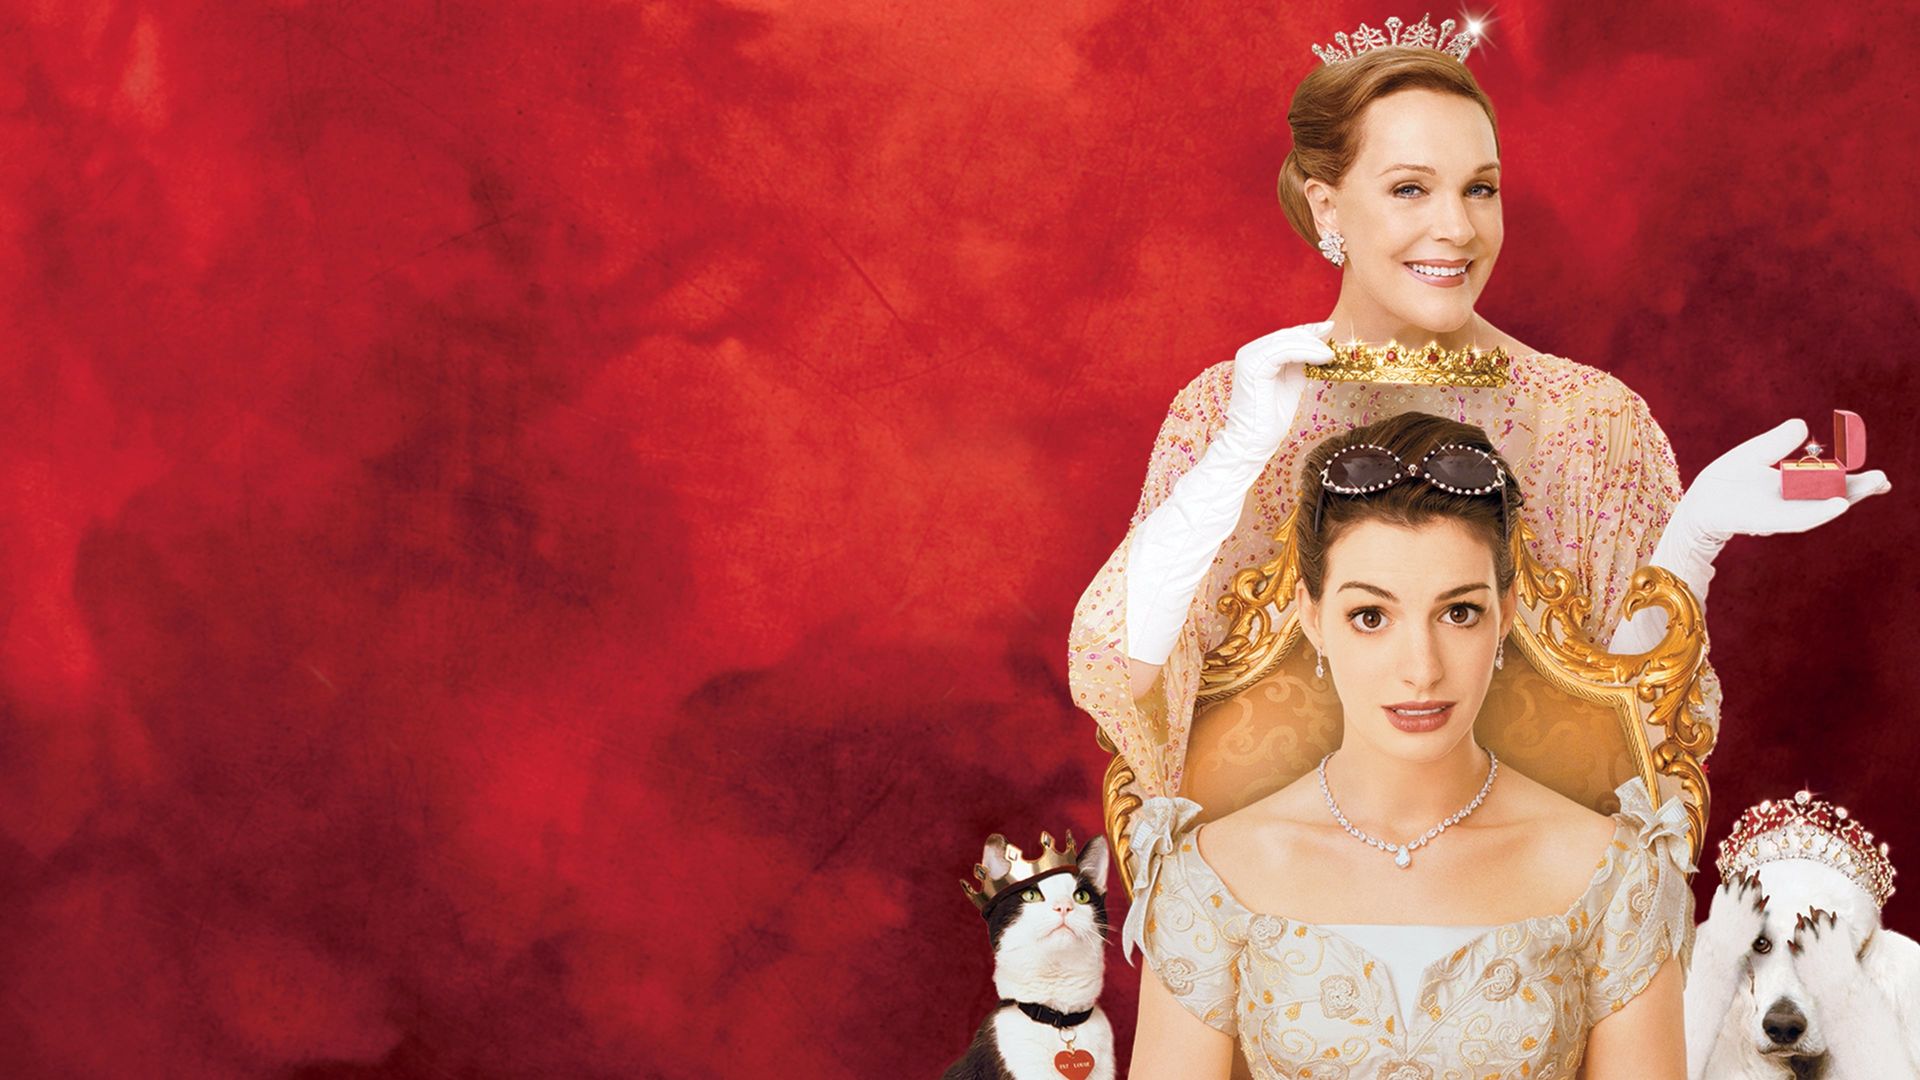 The Princess Diaries 2: Royal Engagement Backdrop